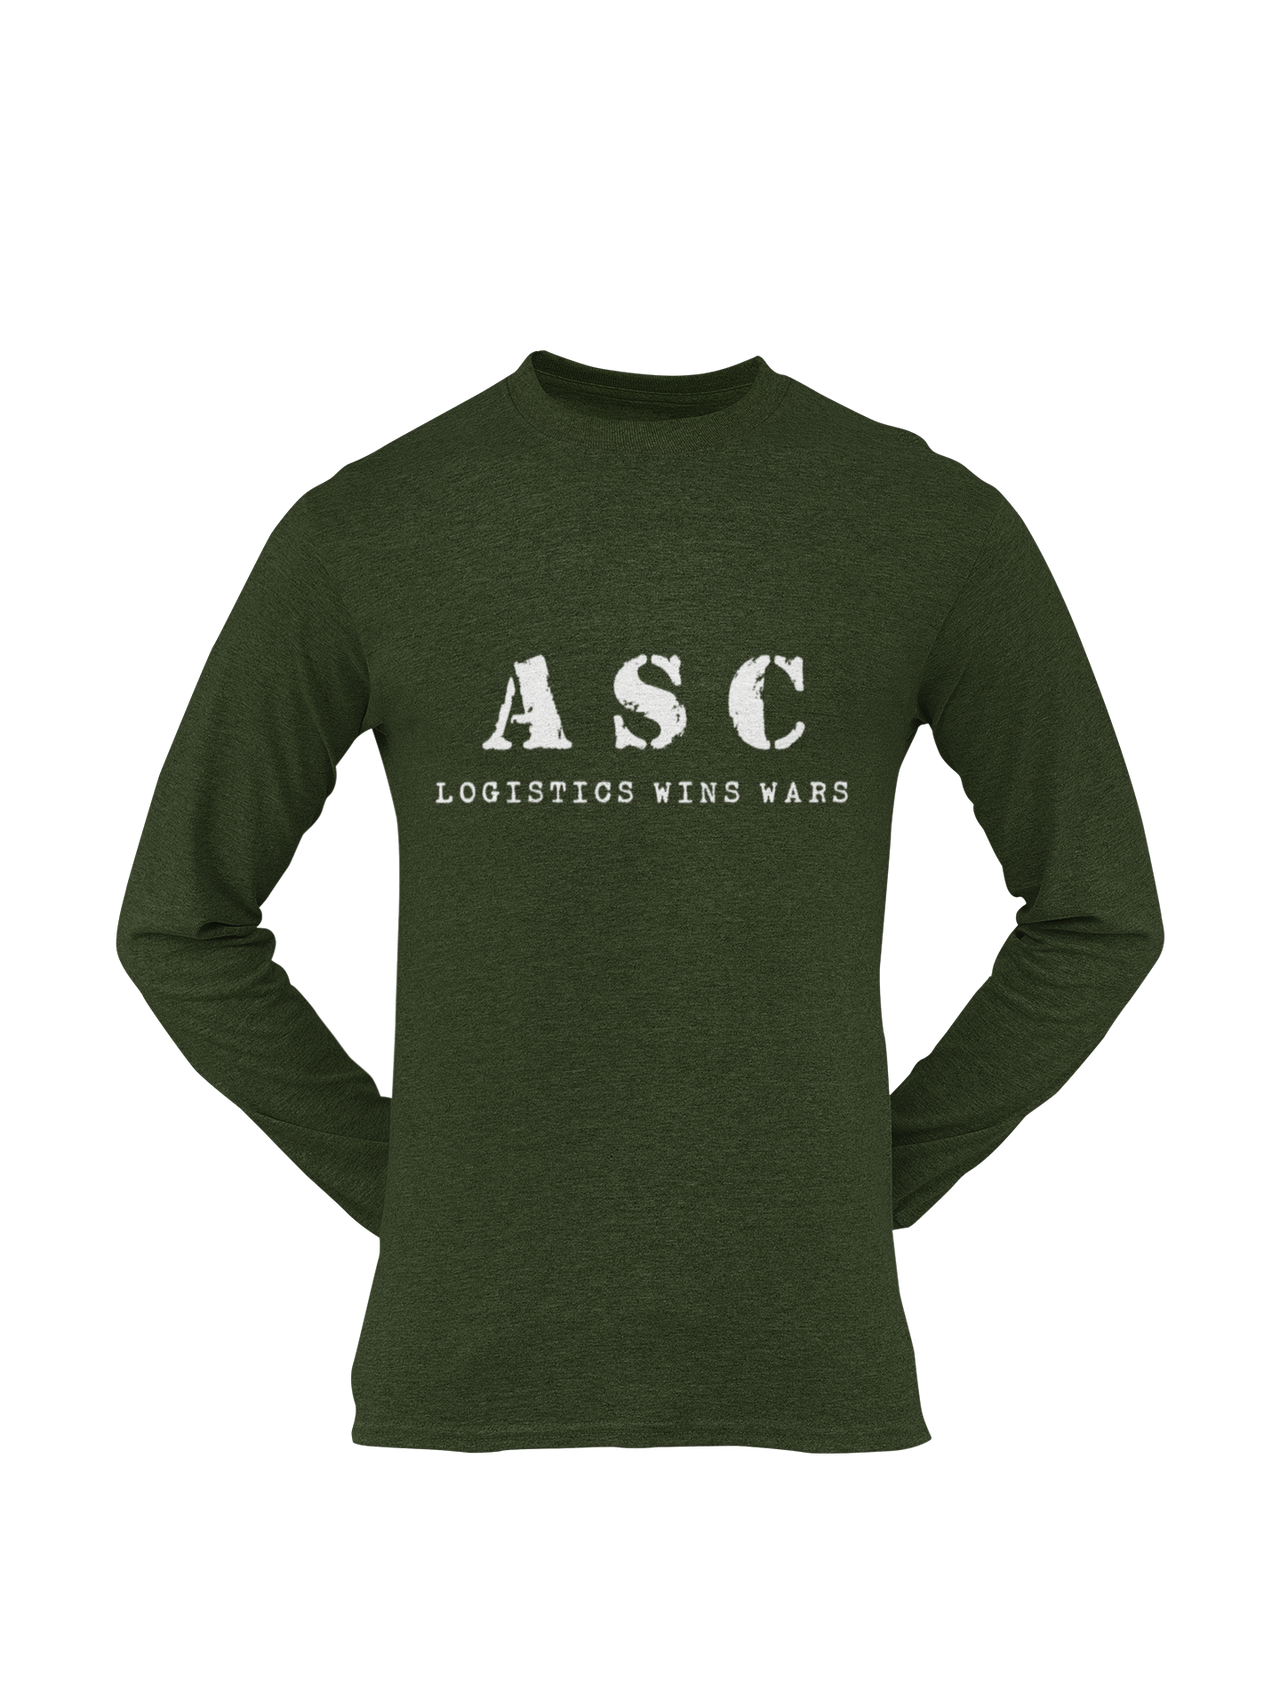 ASC T-shirt - ASC, Logistics Wins Wars (Men)